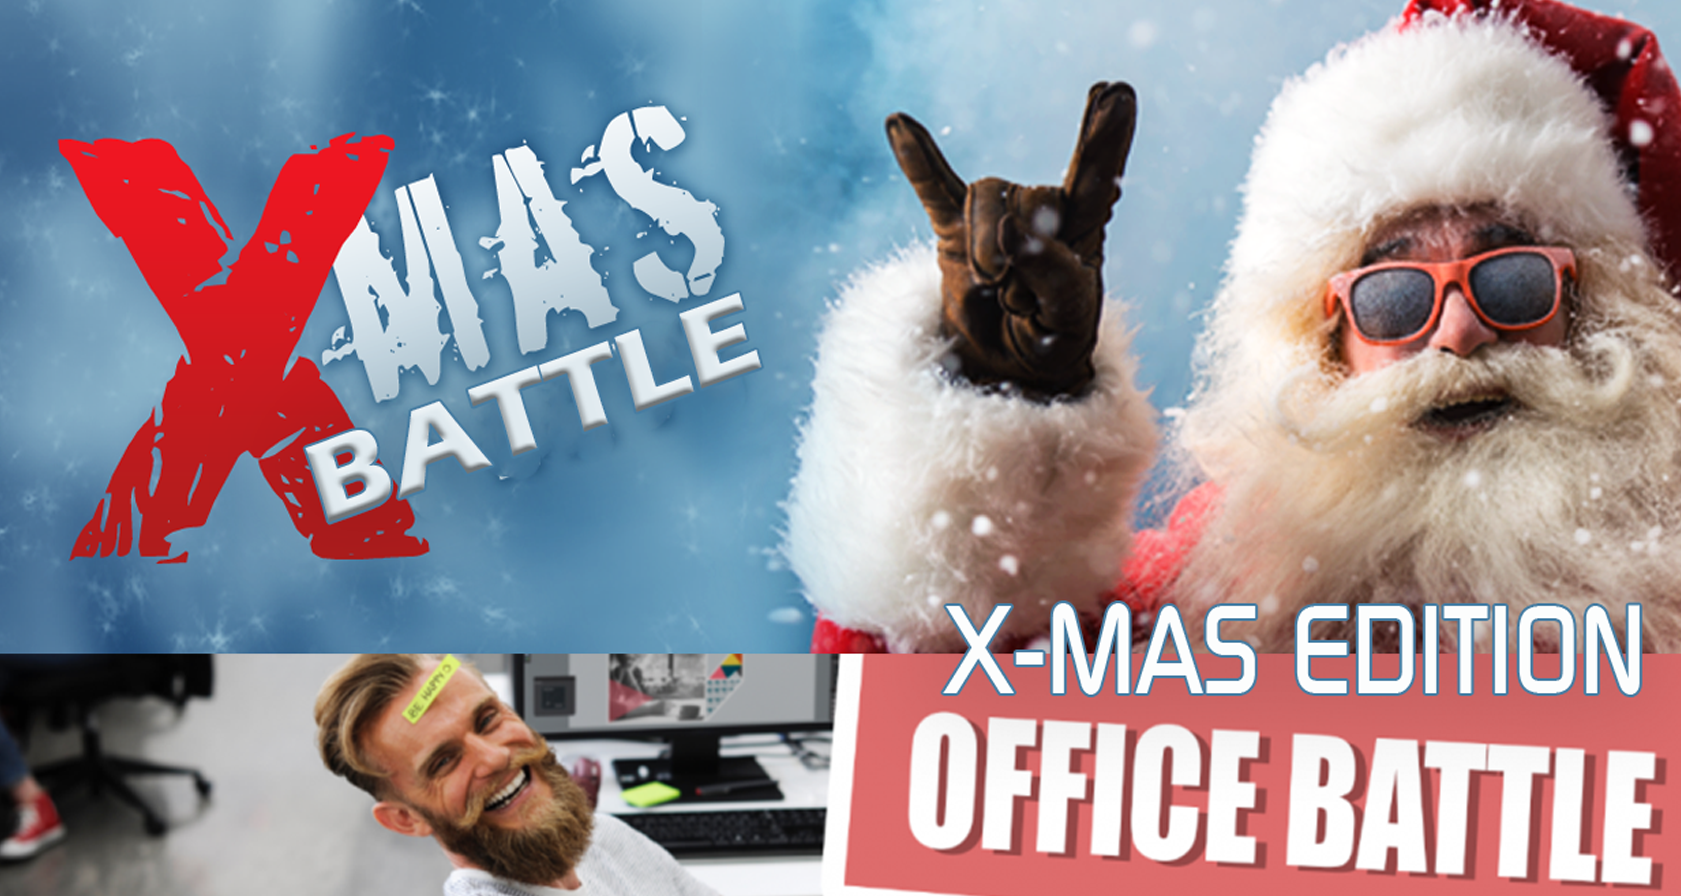 Teamuitje Scheveningen: X-mas Office battle